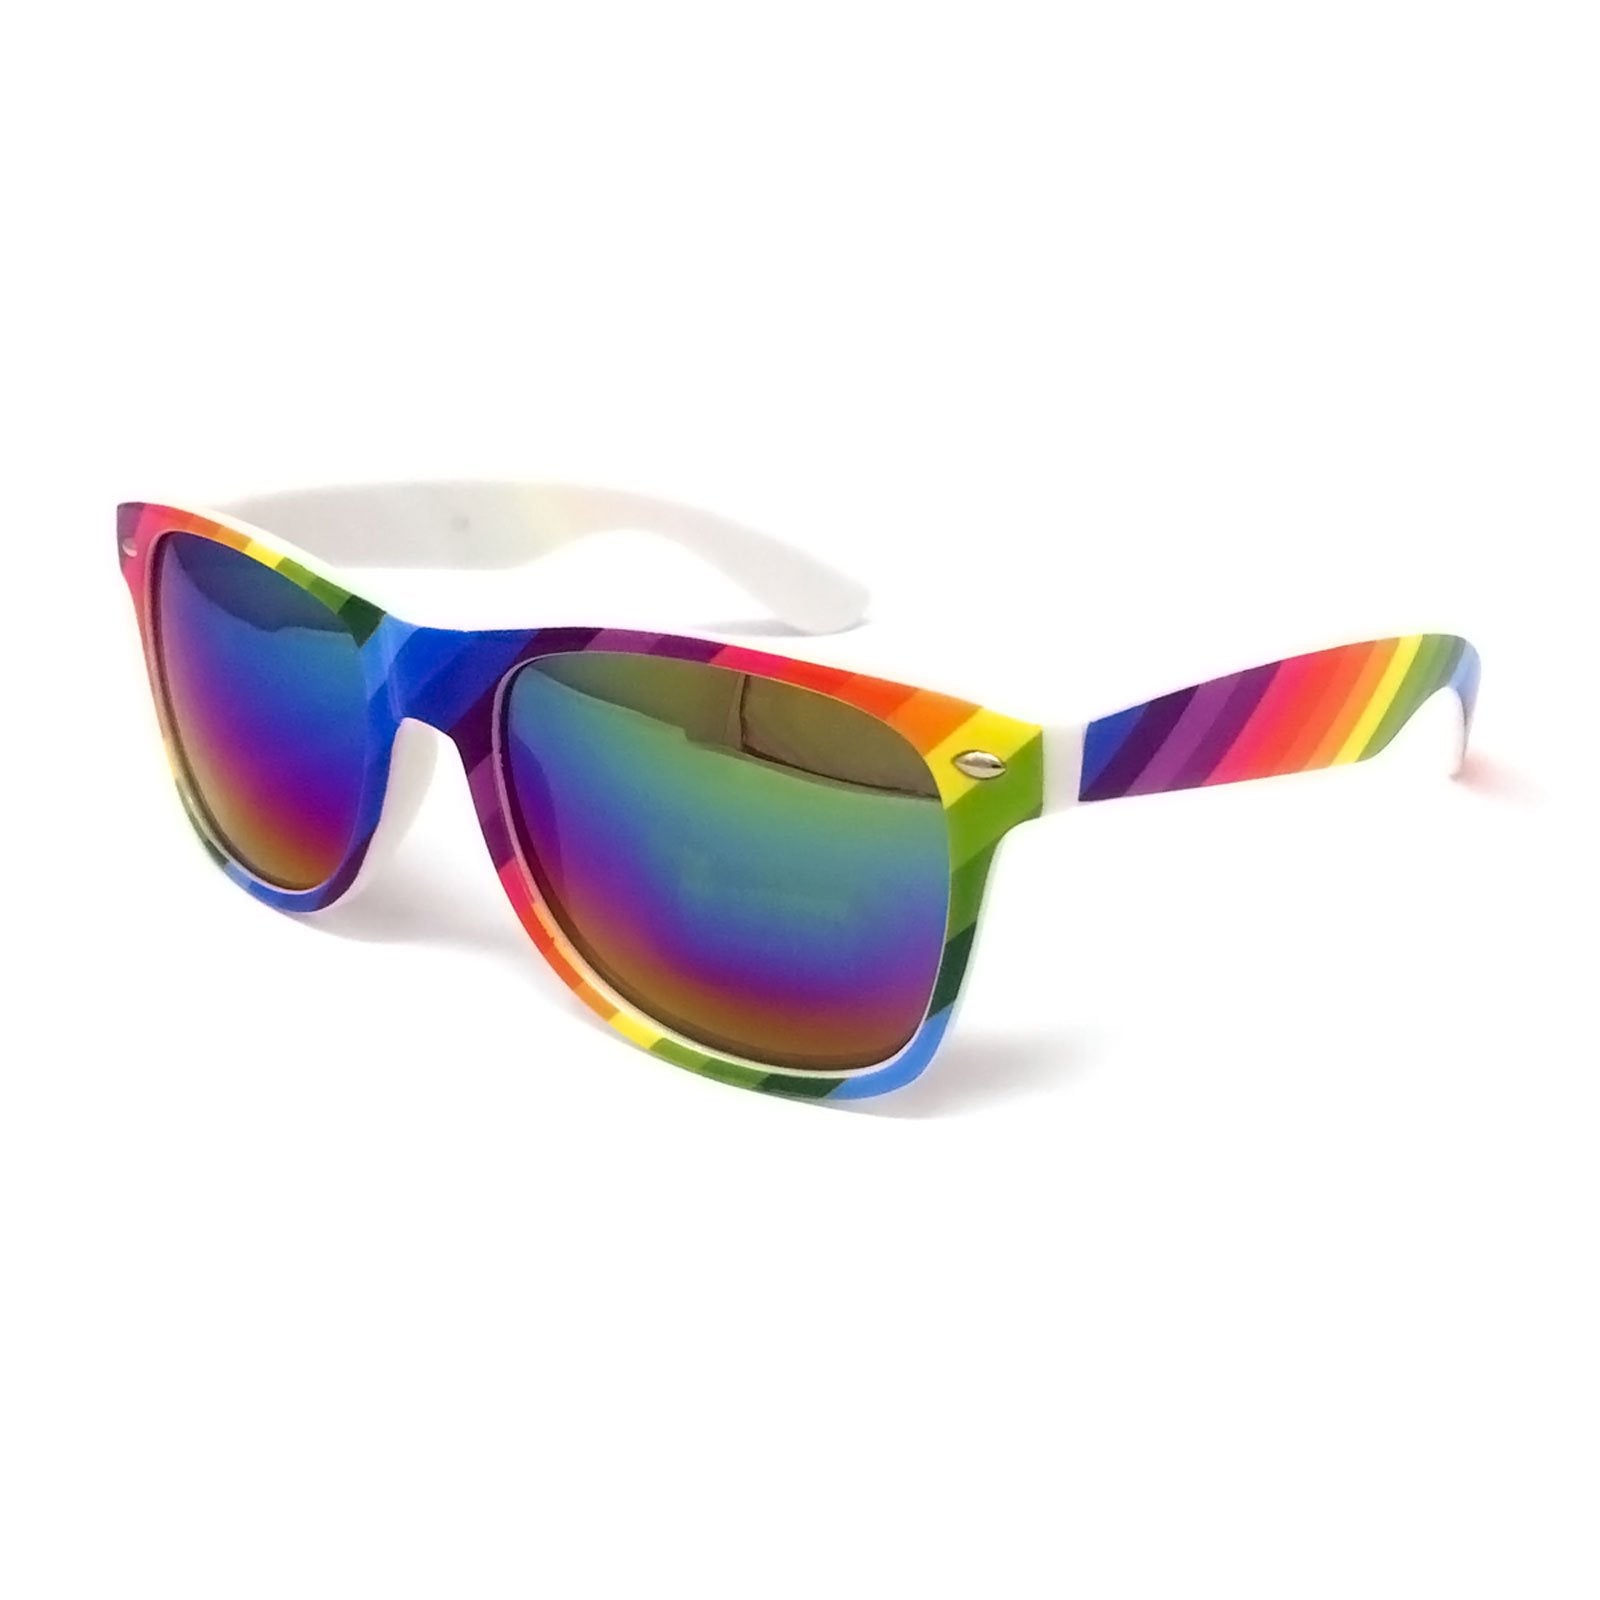 Wholesale Sunglasses: Buy Bulk Sunglasses at Competitive Prices –  JSBlueRidge.com Wholesale